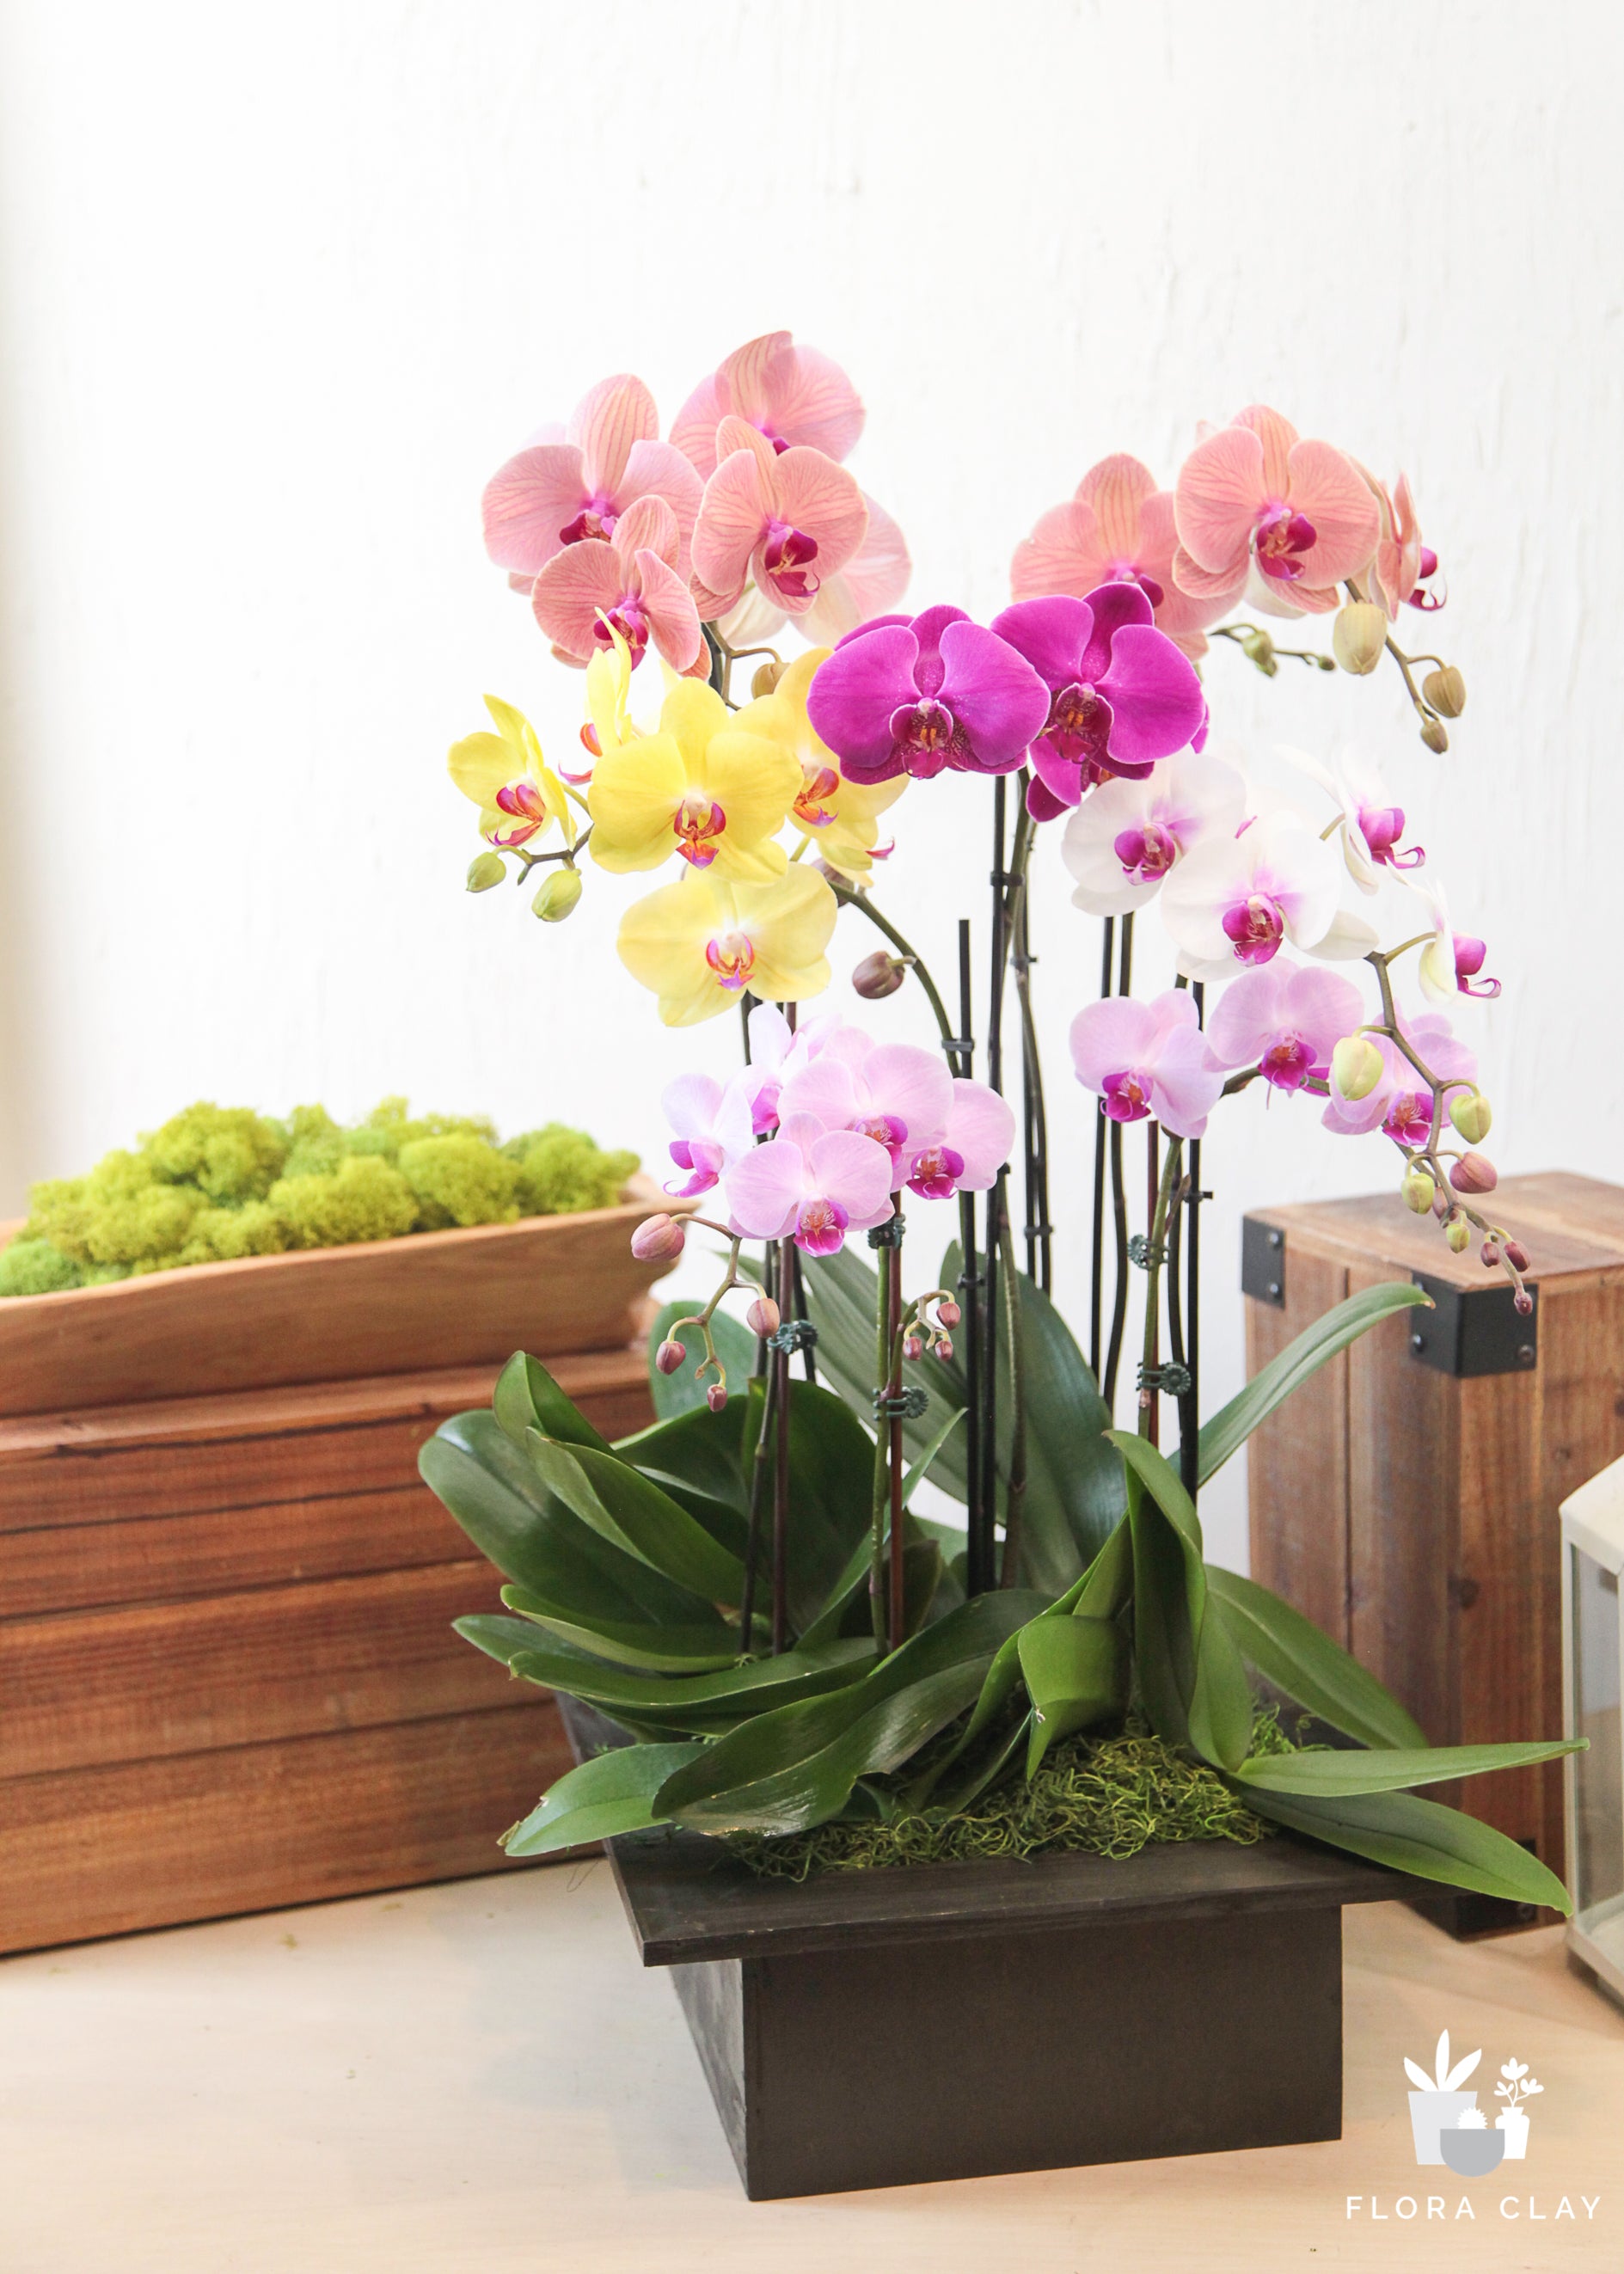 joyful-orchid-floraclay-5.jpg